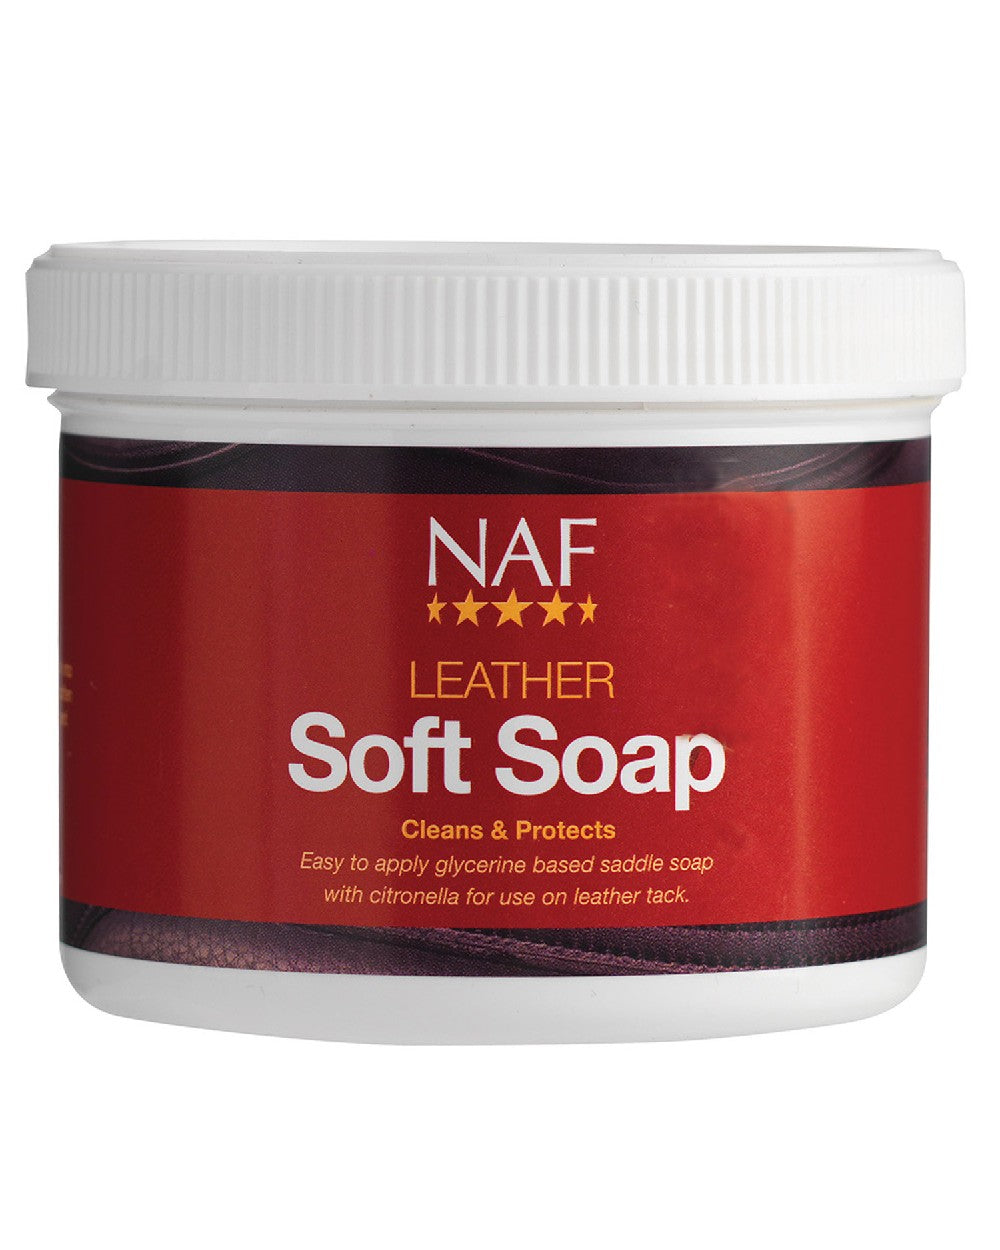 NAF Leather Soft Soap on white background